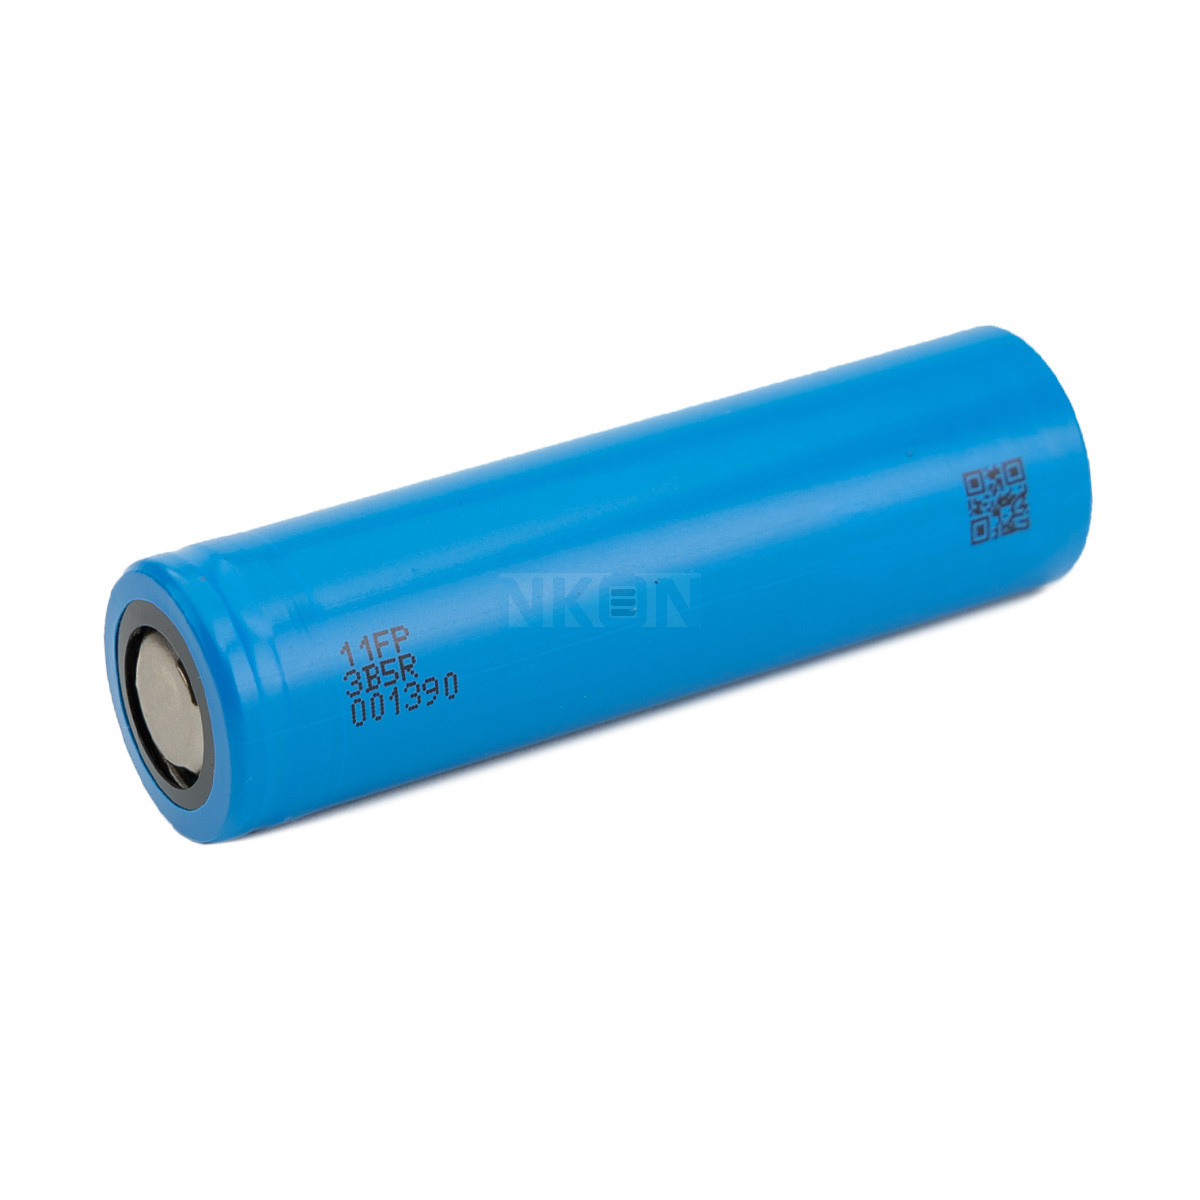 JGNE 18650 1100mah - 33A LIFEPO4 - 3.2V - 18650 - LiFePO4 - Rechargeable  batteries